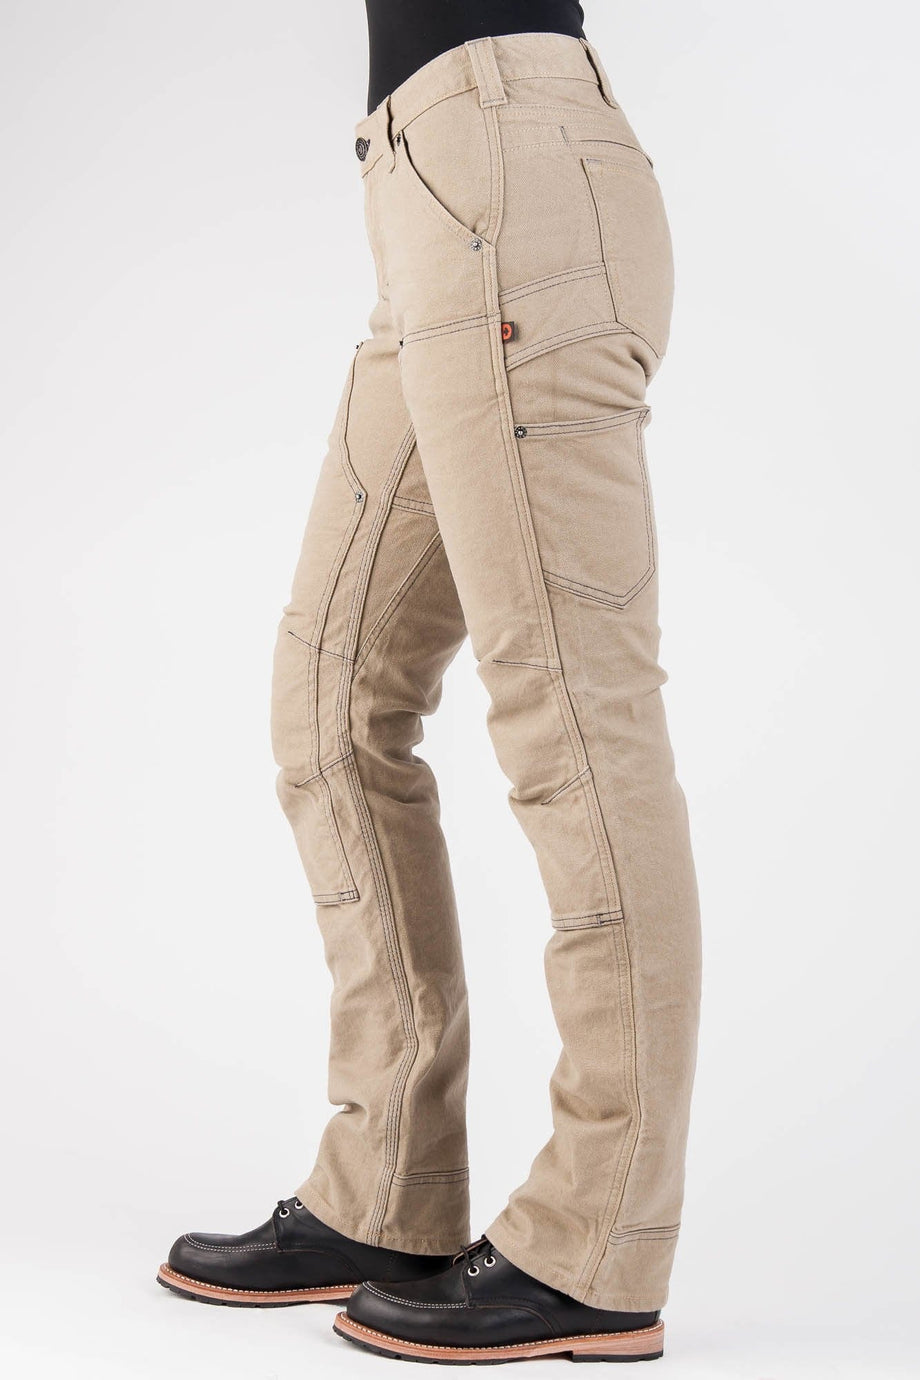 Dovetail Workwear Women's Saddle Brown Canvas Work Pants (12 X 32